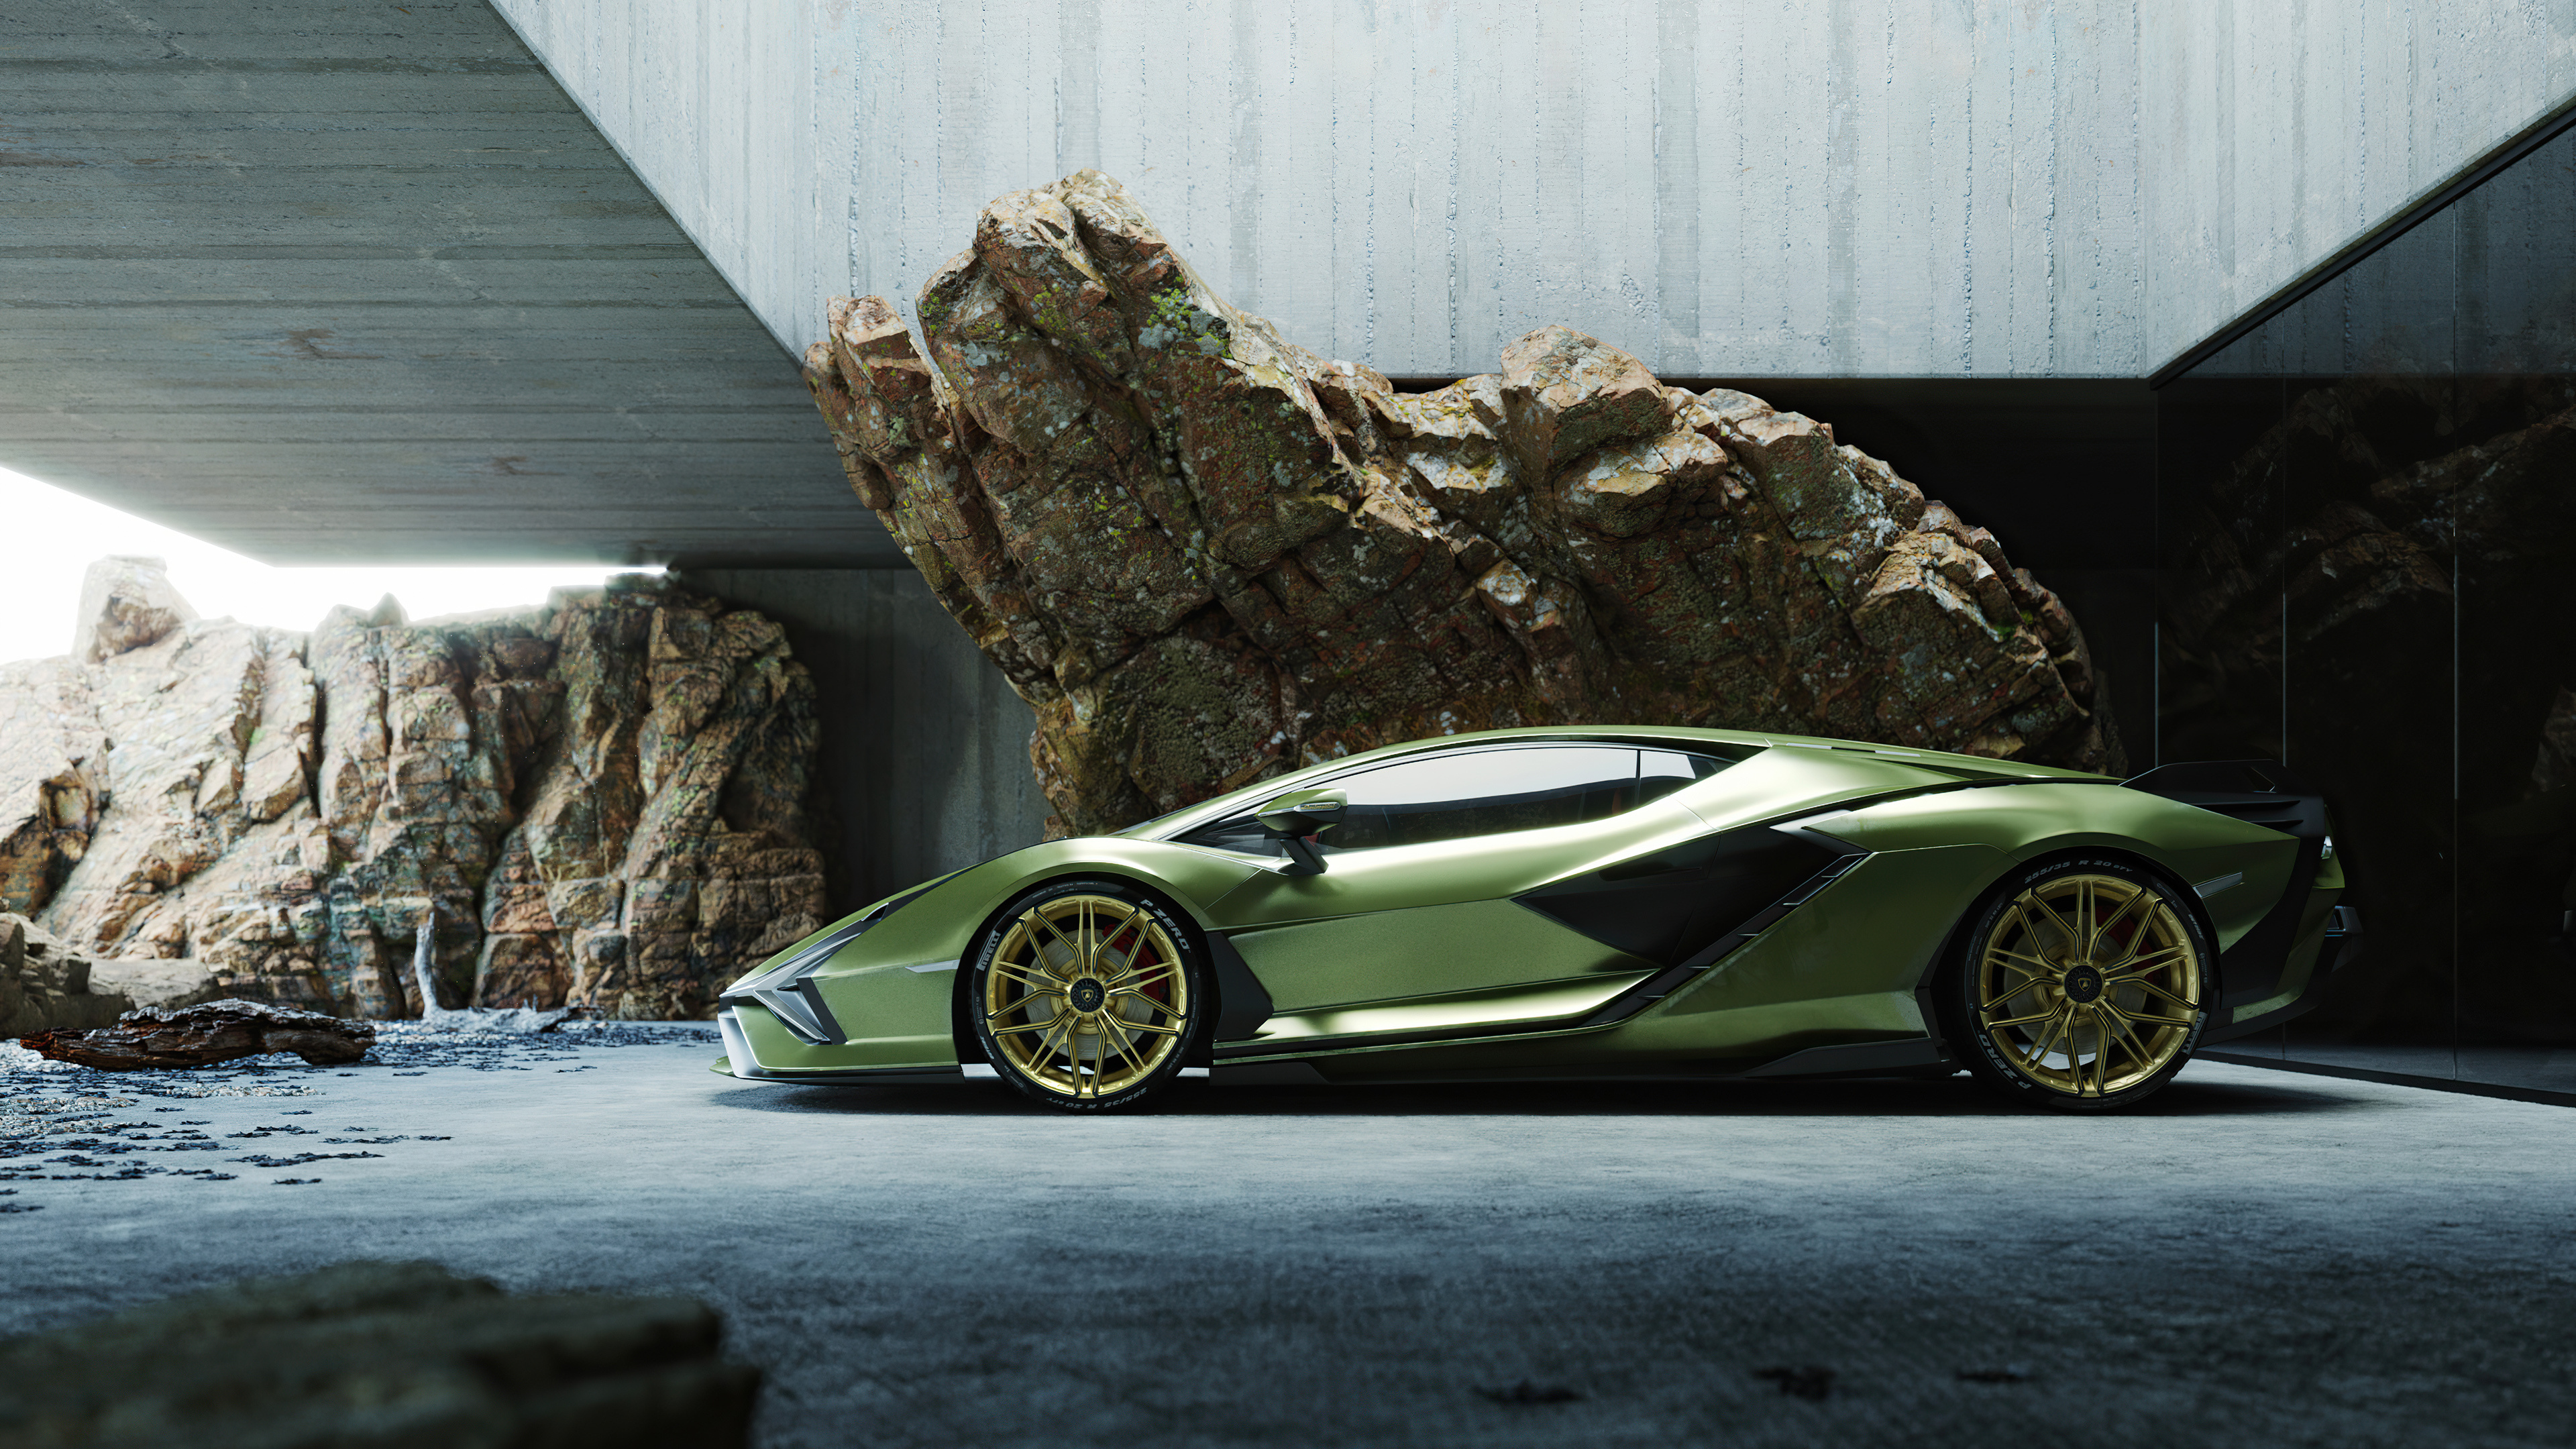 Lamborghini Sian, Exquisite design, Powerful performance, Automotive masterpiece, 3840x2160 4K Desktop